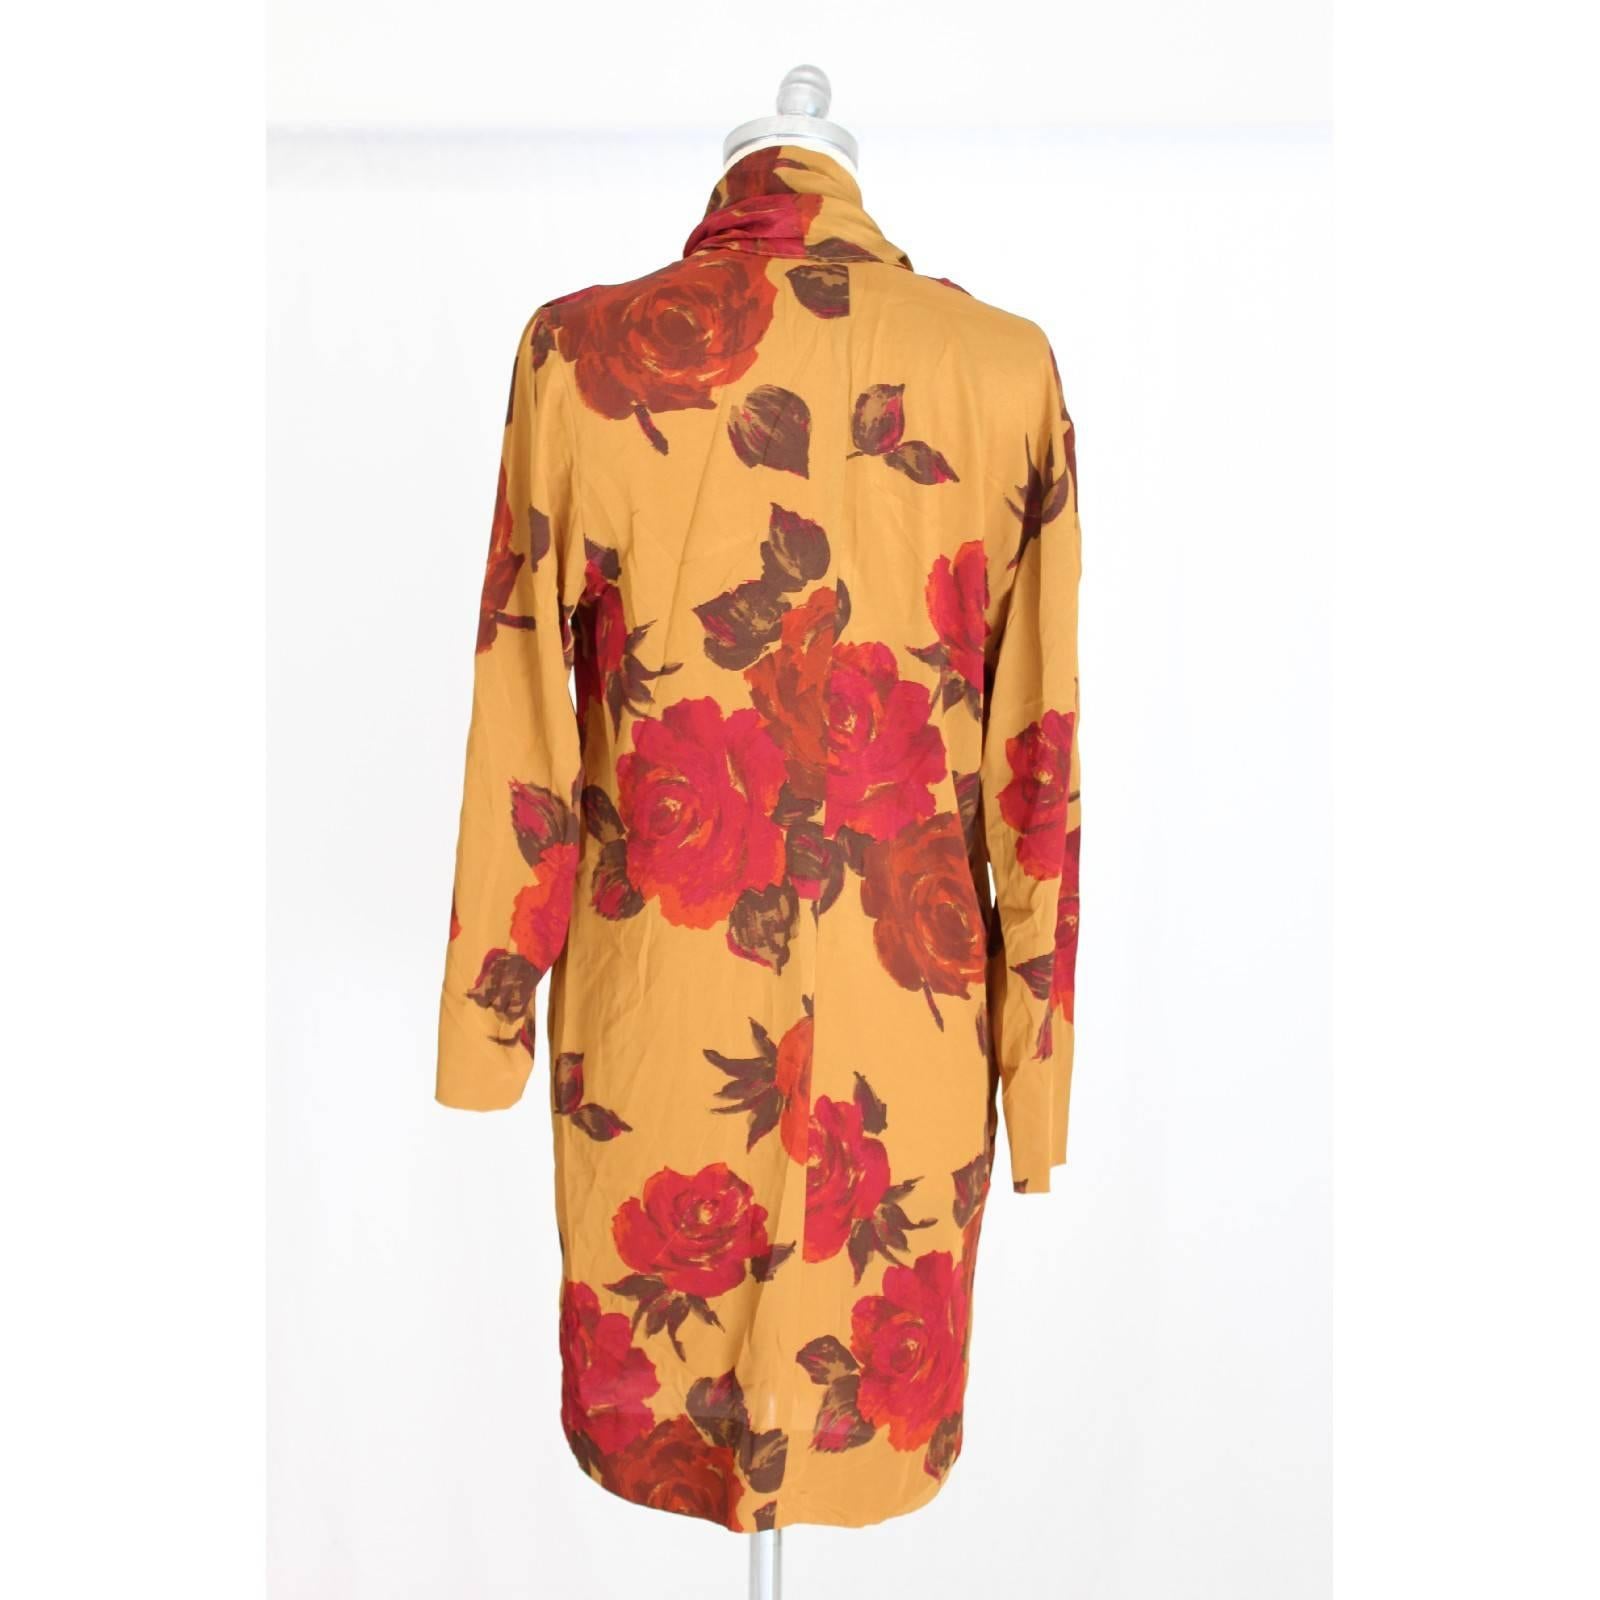 Brown Laura Biagiotti Risposte orange brown silk floral dress 1980s size 42 it vintage For Sale